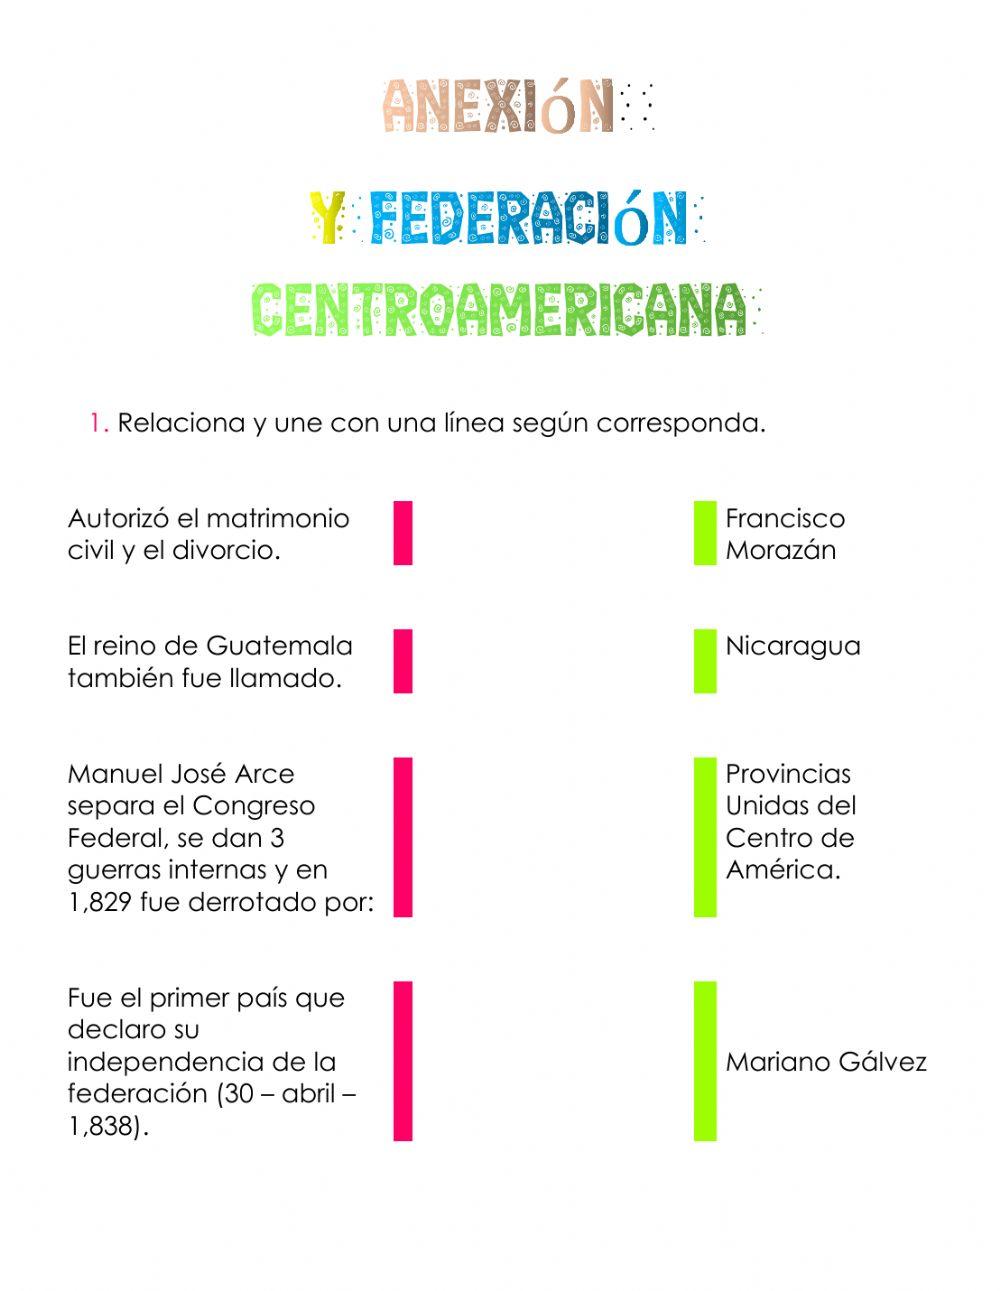 Anexión y federación centroamericana